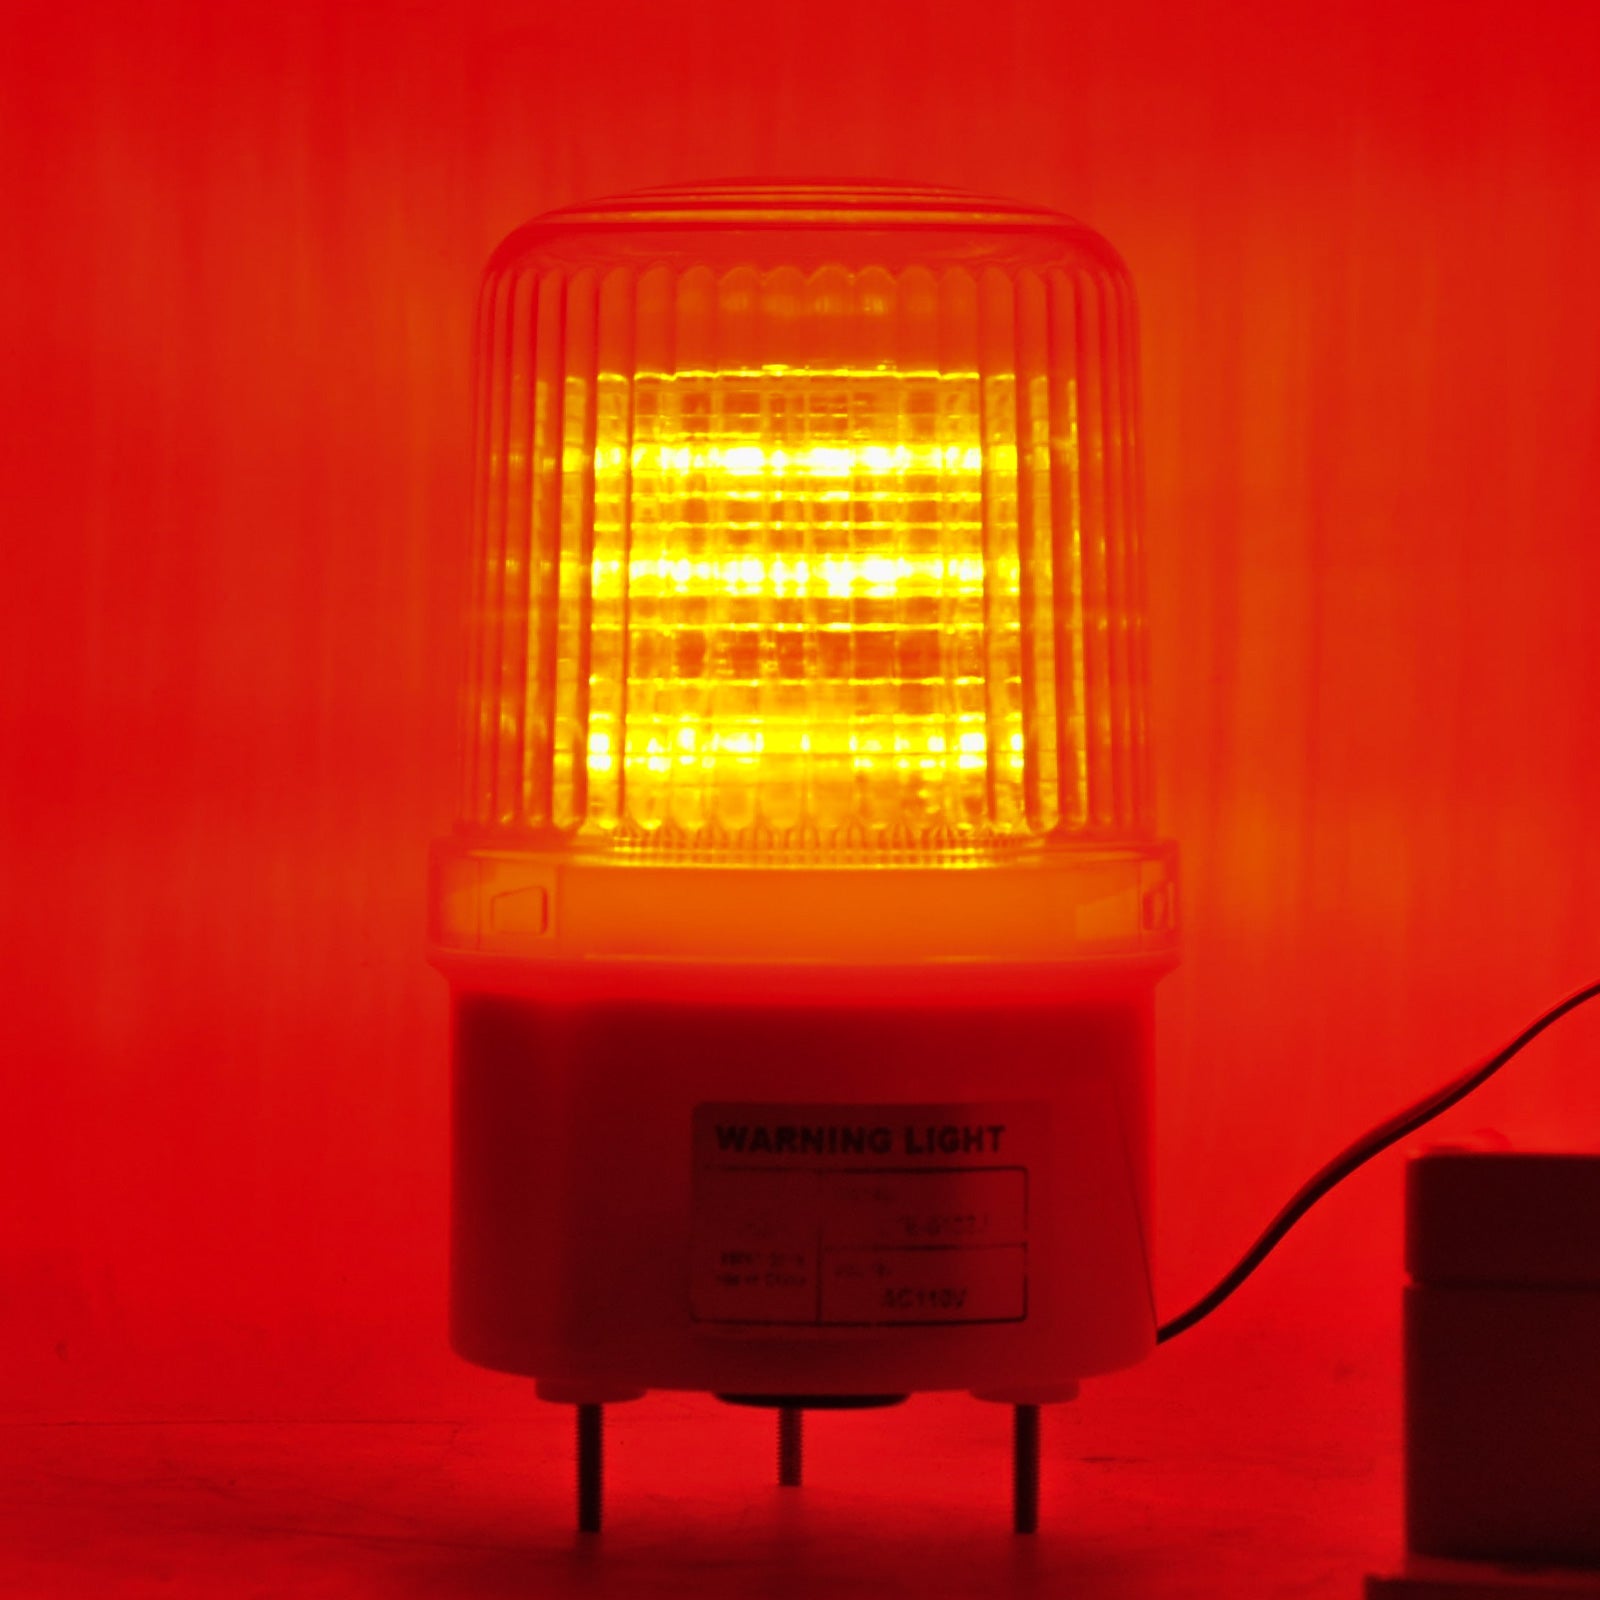 YASONG LED Strobe Light Industrial Warning Beacon Light with 90dB